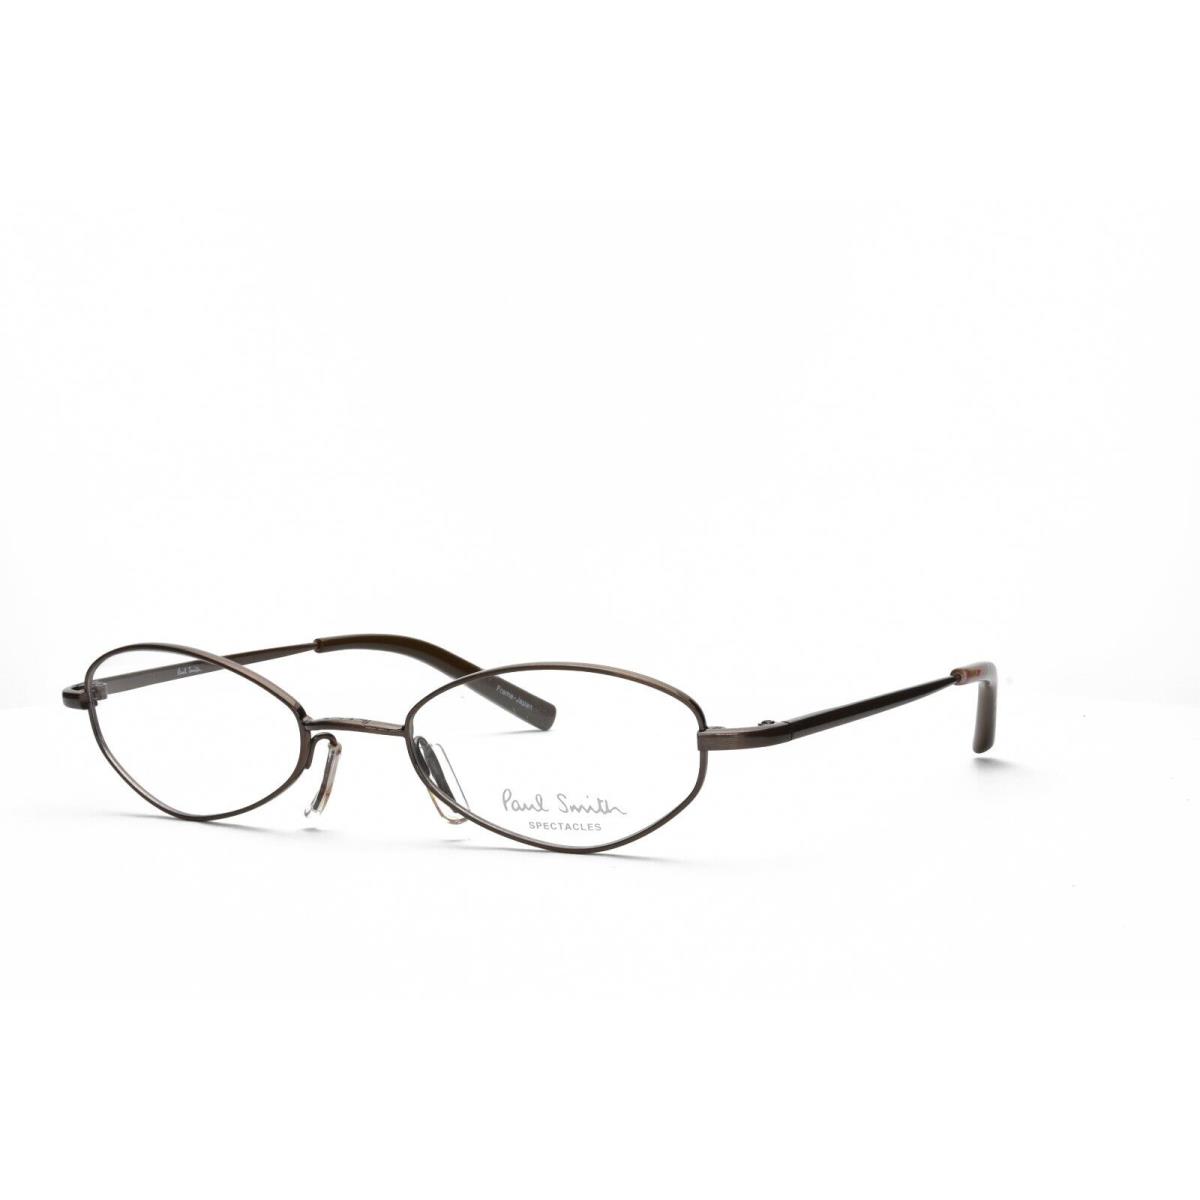 Paul Smith PS 198 MC Eyeglasses Frames Only 48-19-132